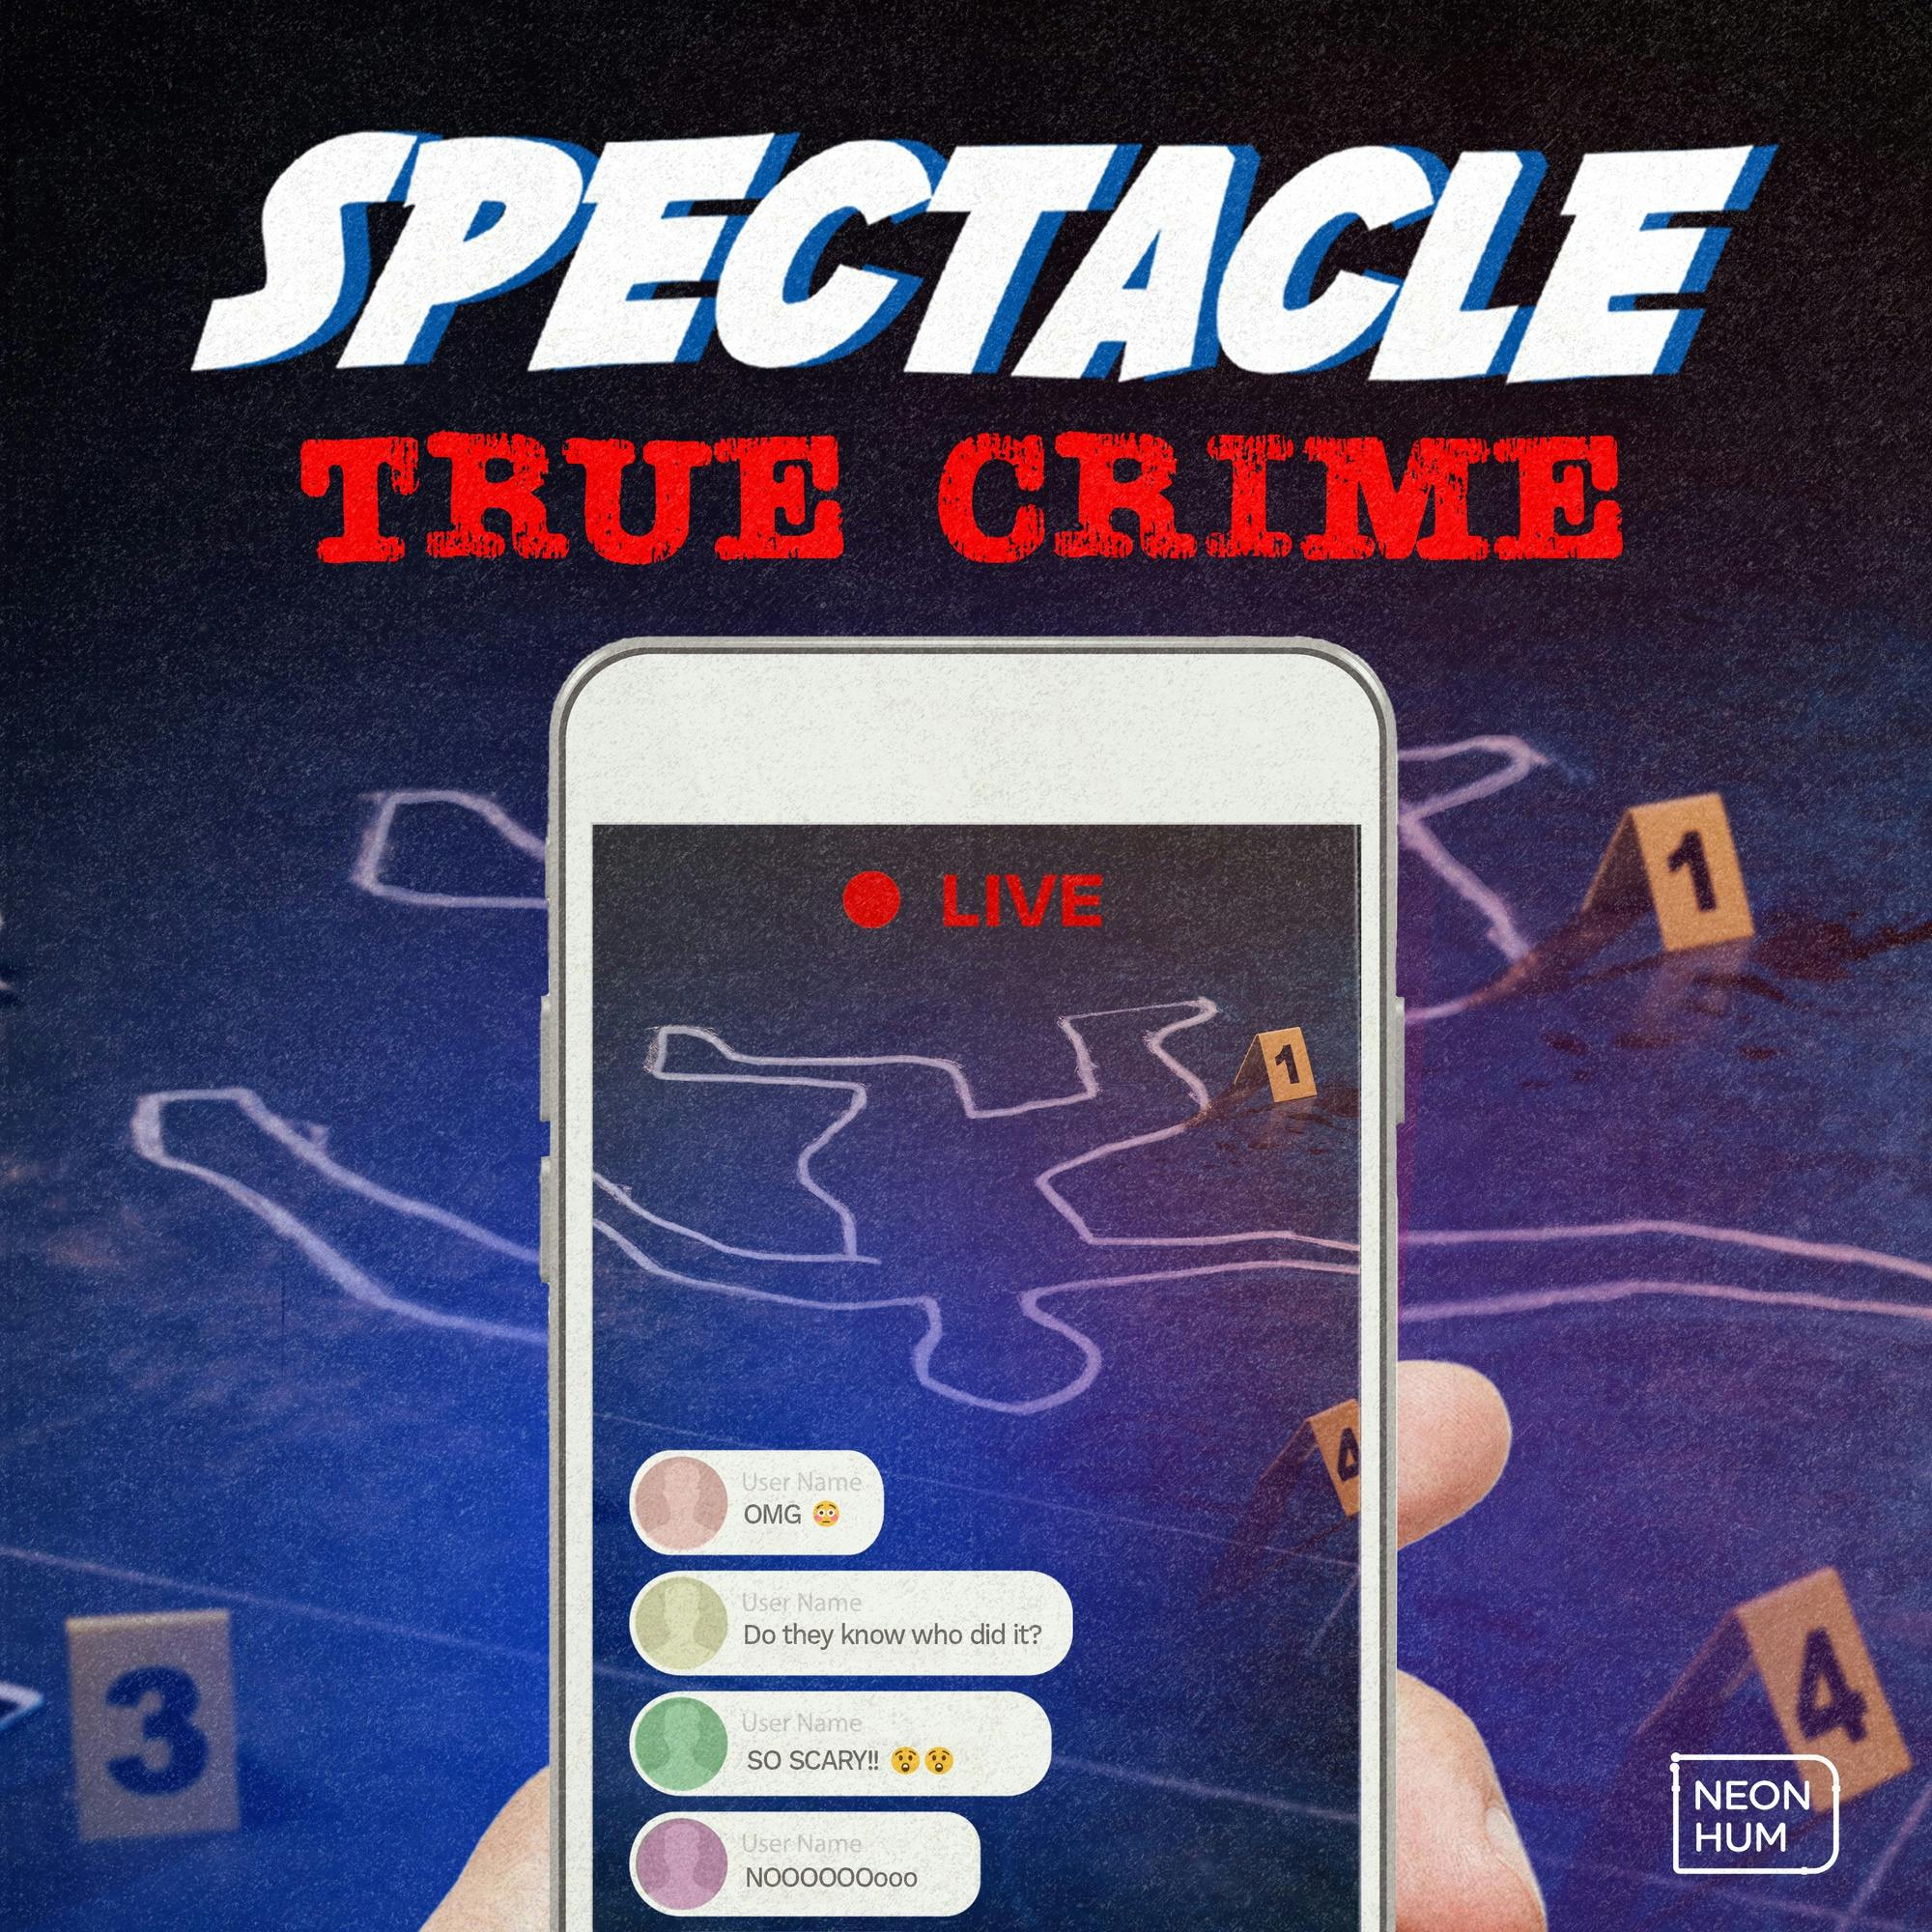 True Crime | 10. Is Prestige True Crime Sensationalizing Real Pain?